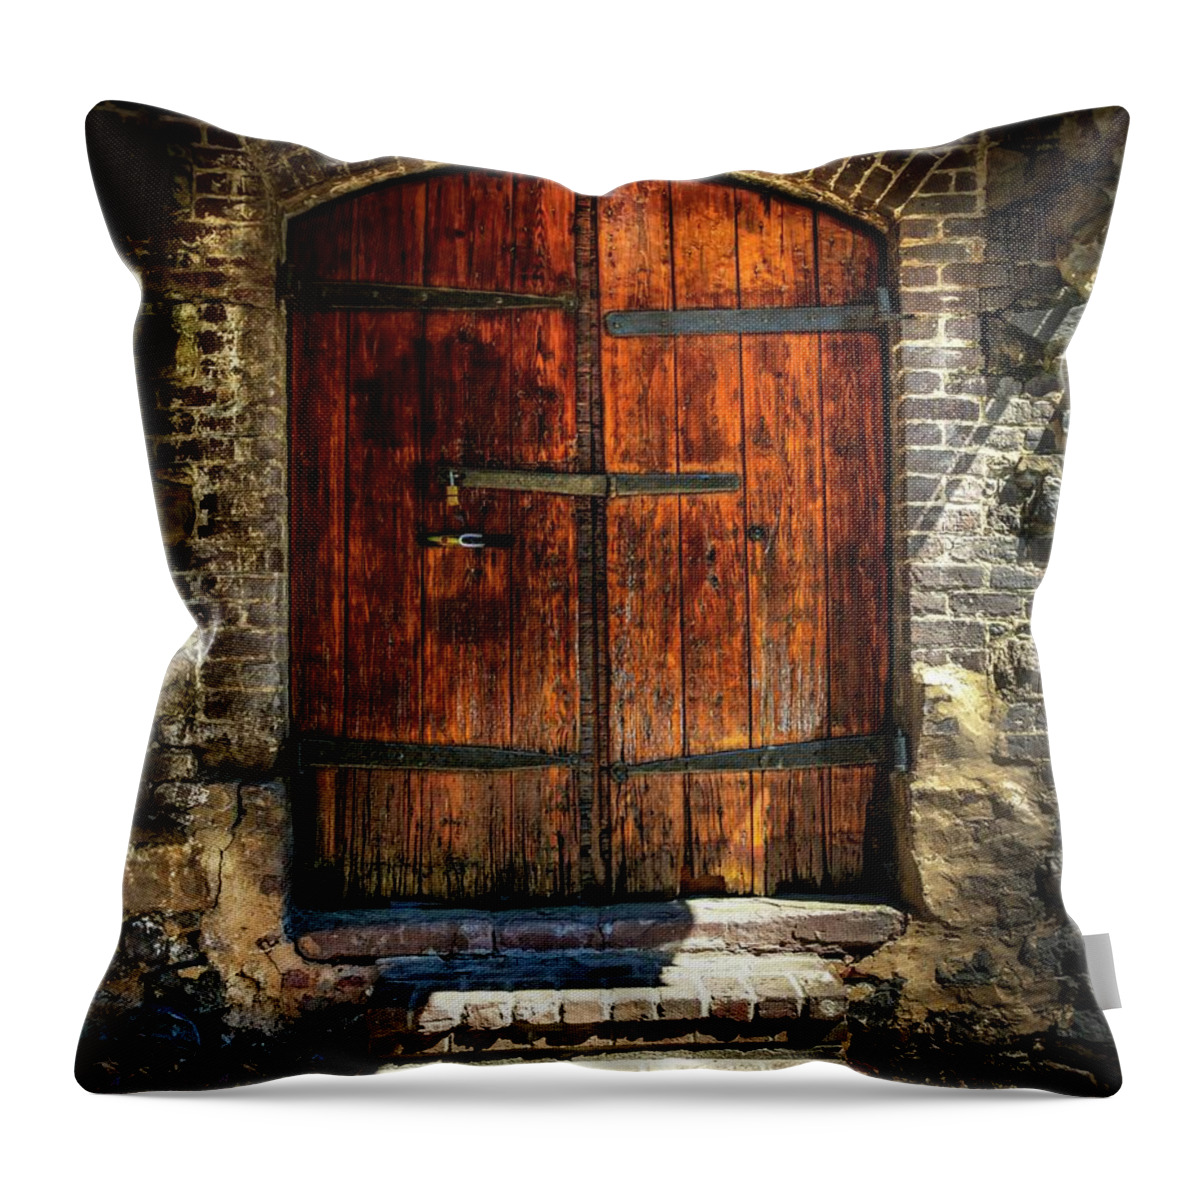 Savannah Throw Pillow featuring the photograph Old Savannah Warehouse Door by Harriet Feagin